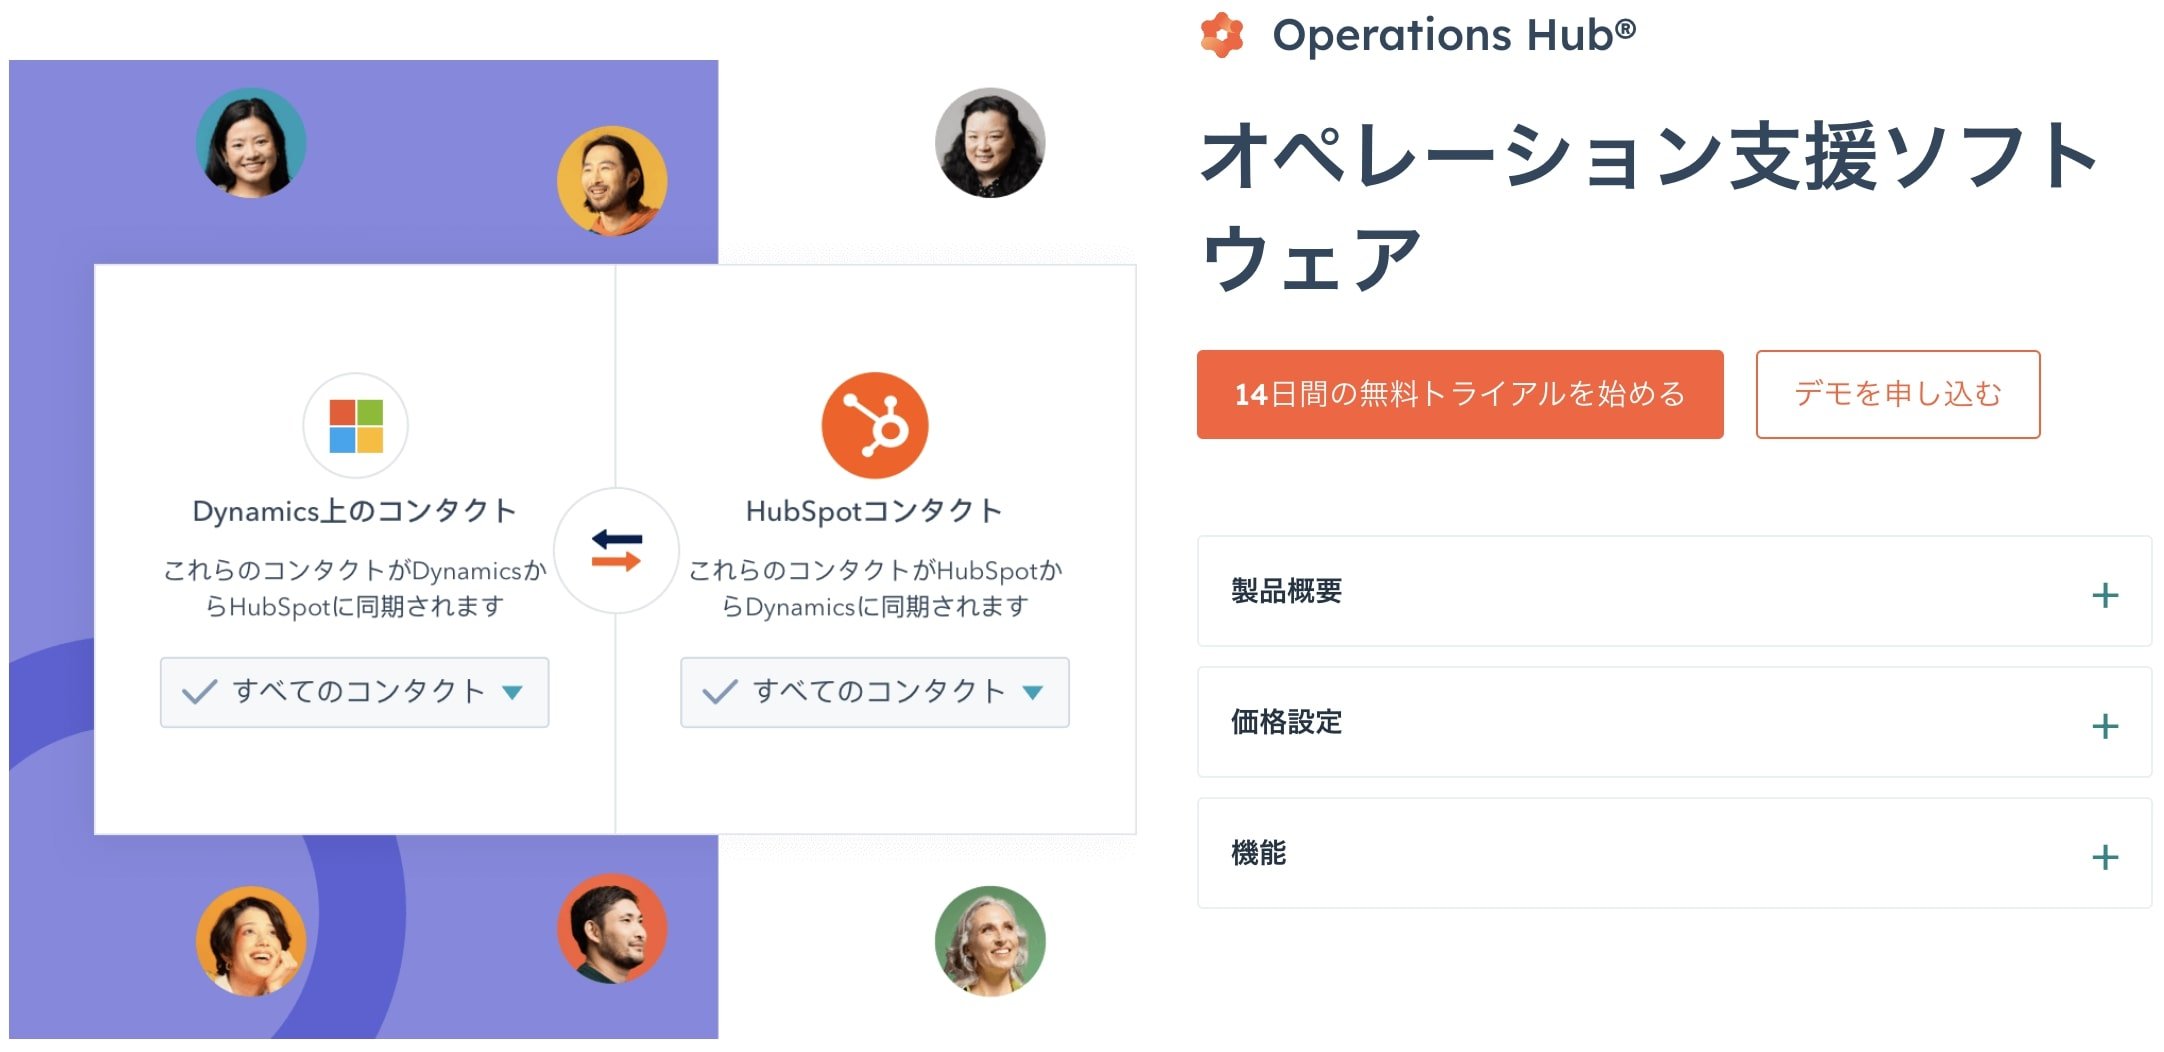 Operations Hub公式HP